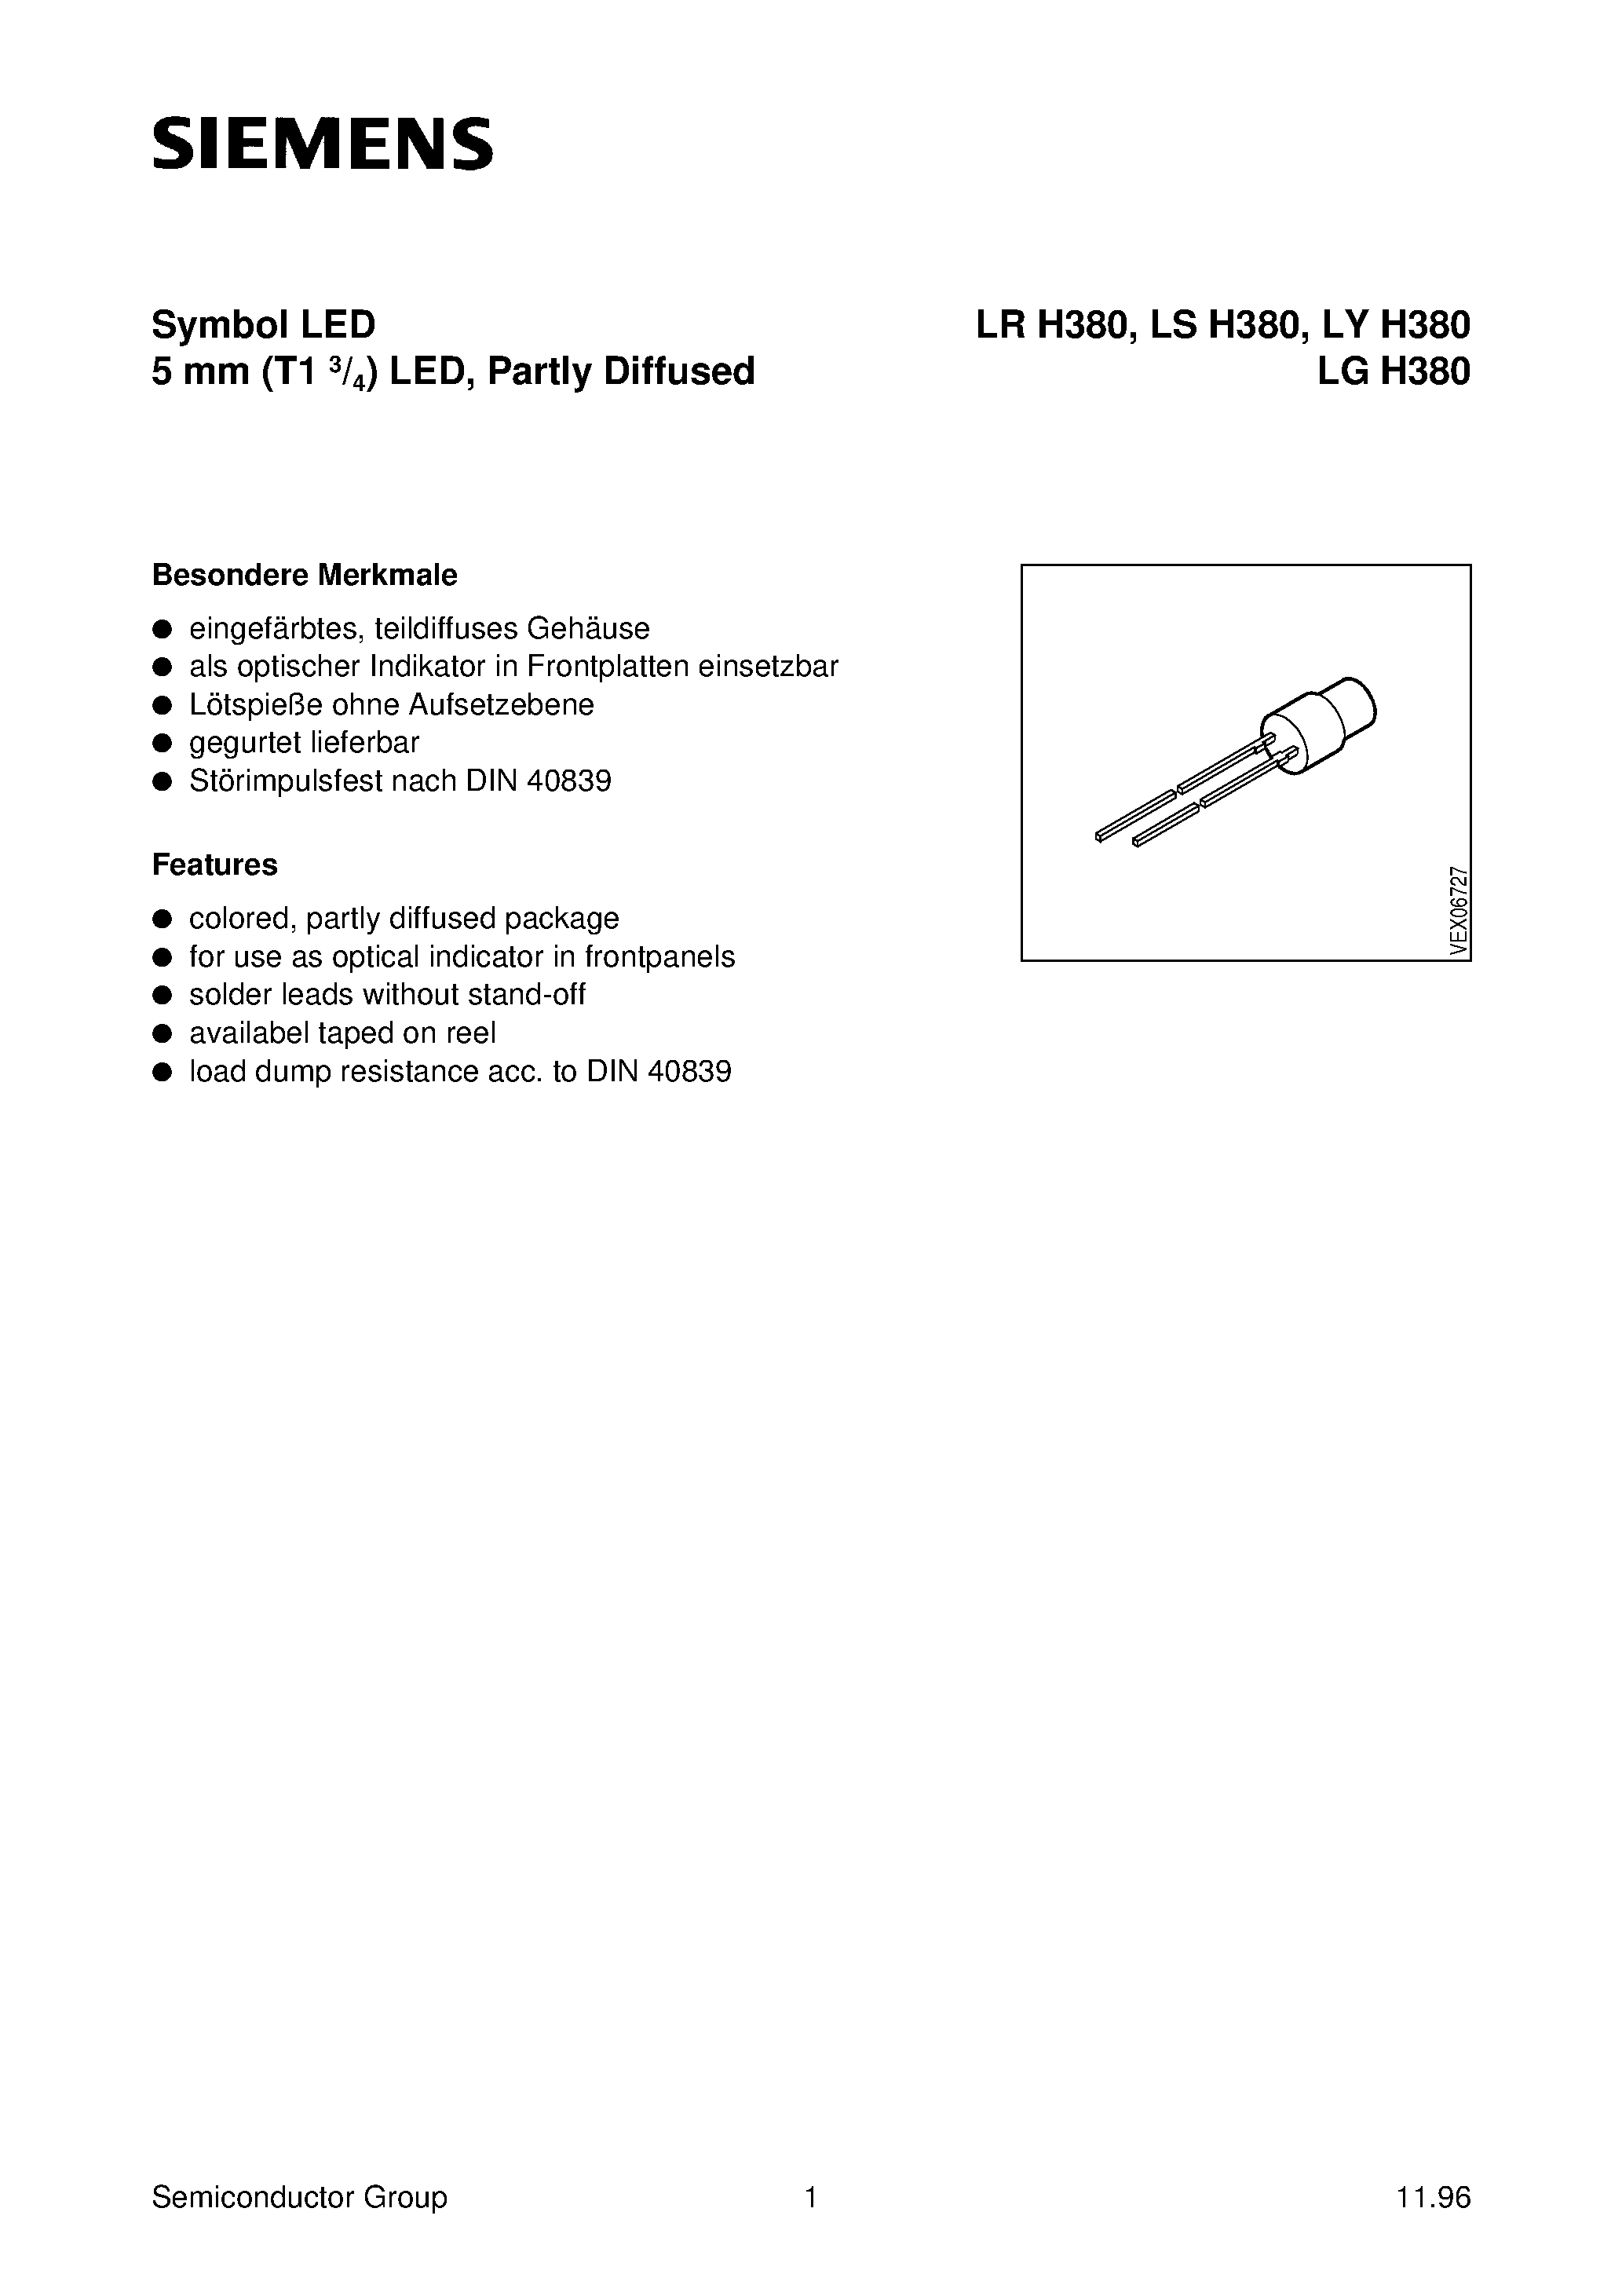 Datasheet LYH380-J - Symbol LED 5 mm T1 3/4 LED/ Partly Diffused page 1